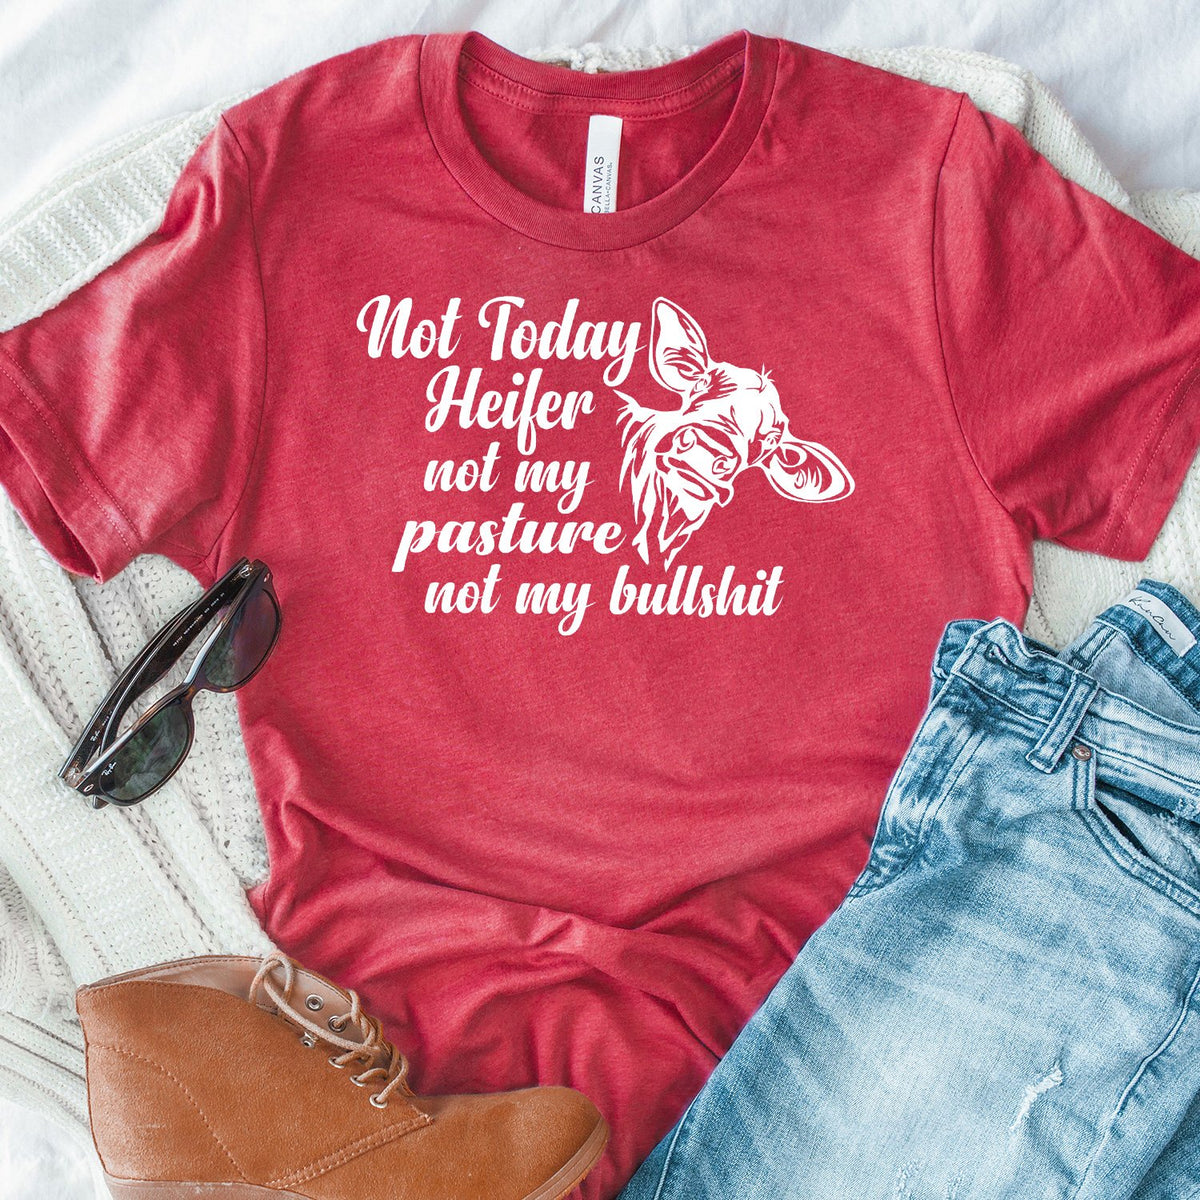 Not Today Heifer Not My Pasture Not My Bullshit - Short Sleeve Tee Shirt